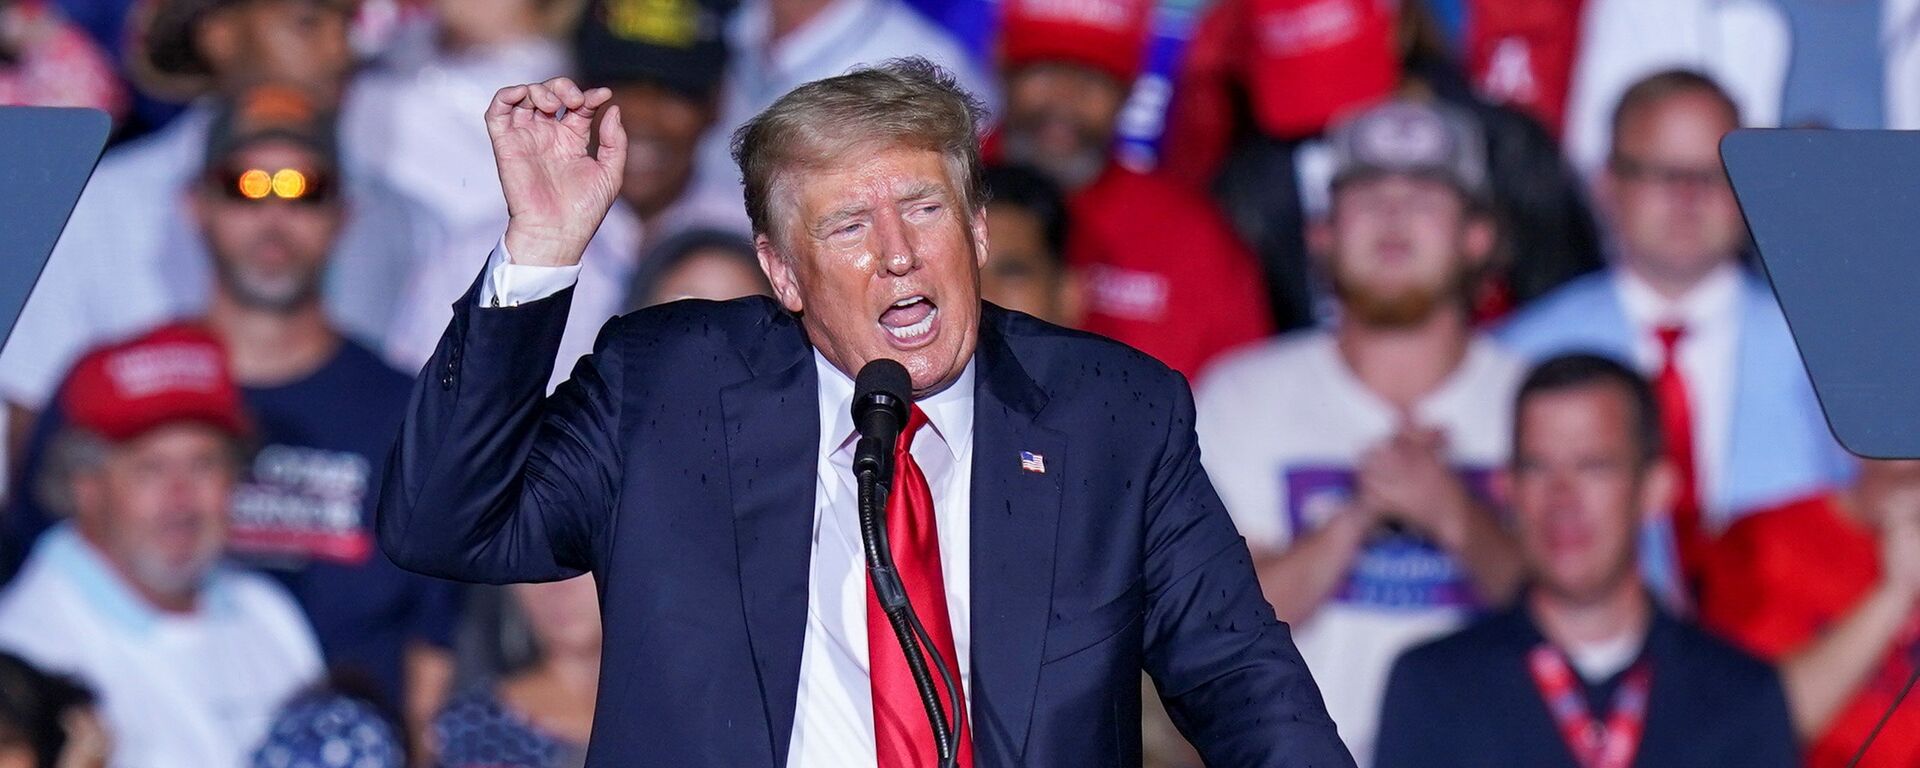 Former U.S. President Donald Trump speaks during a rally in Cullman, Alabama, U.S., August 21, 2021 - Sputnik International, 1920, 01.09.2021